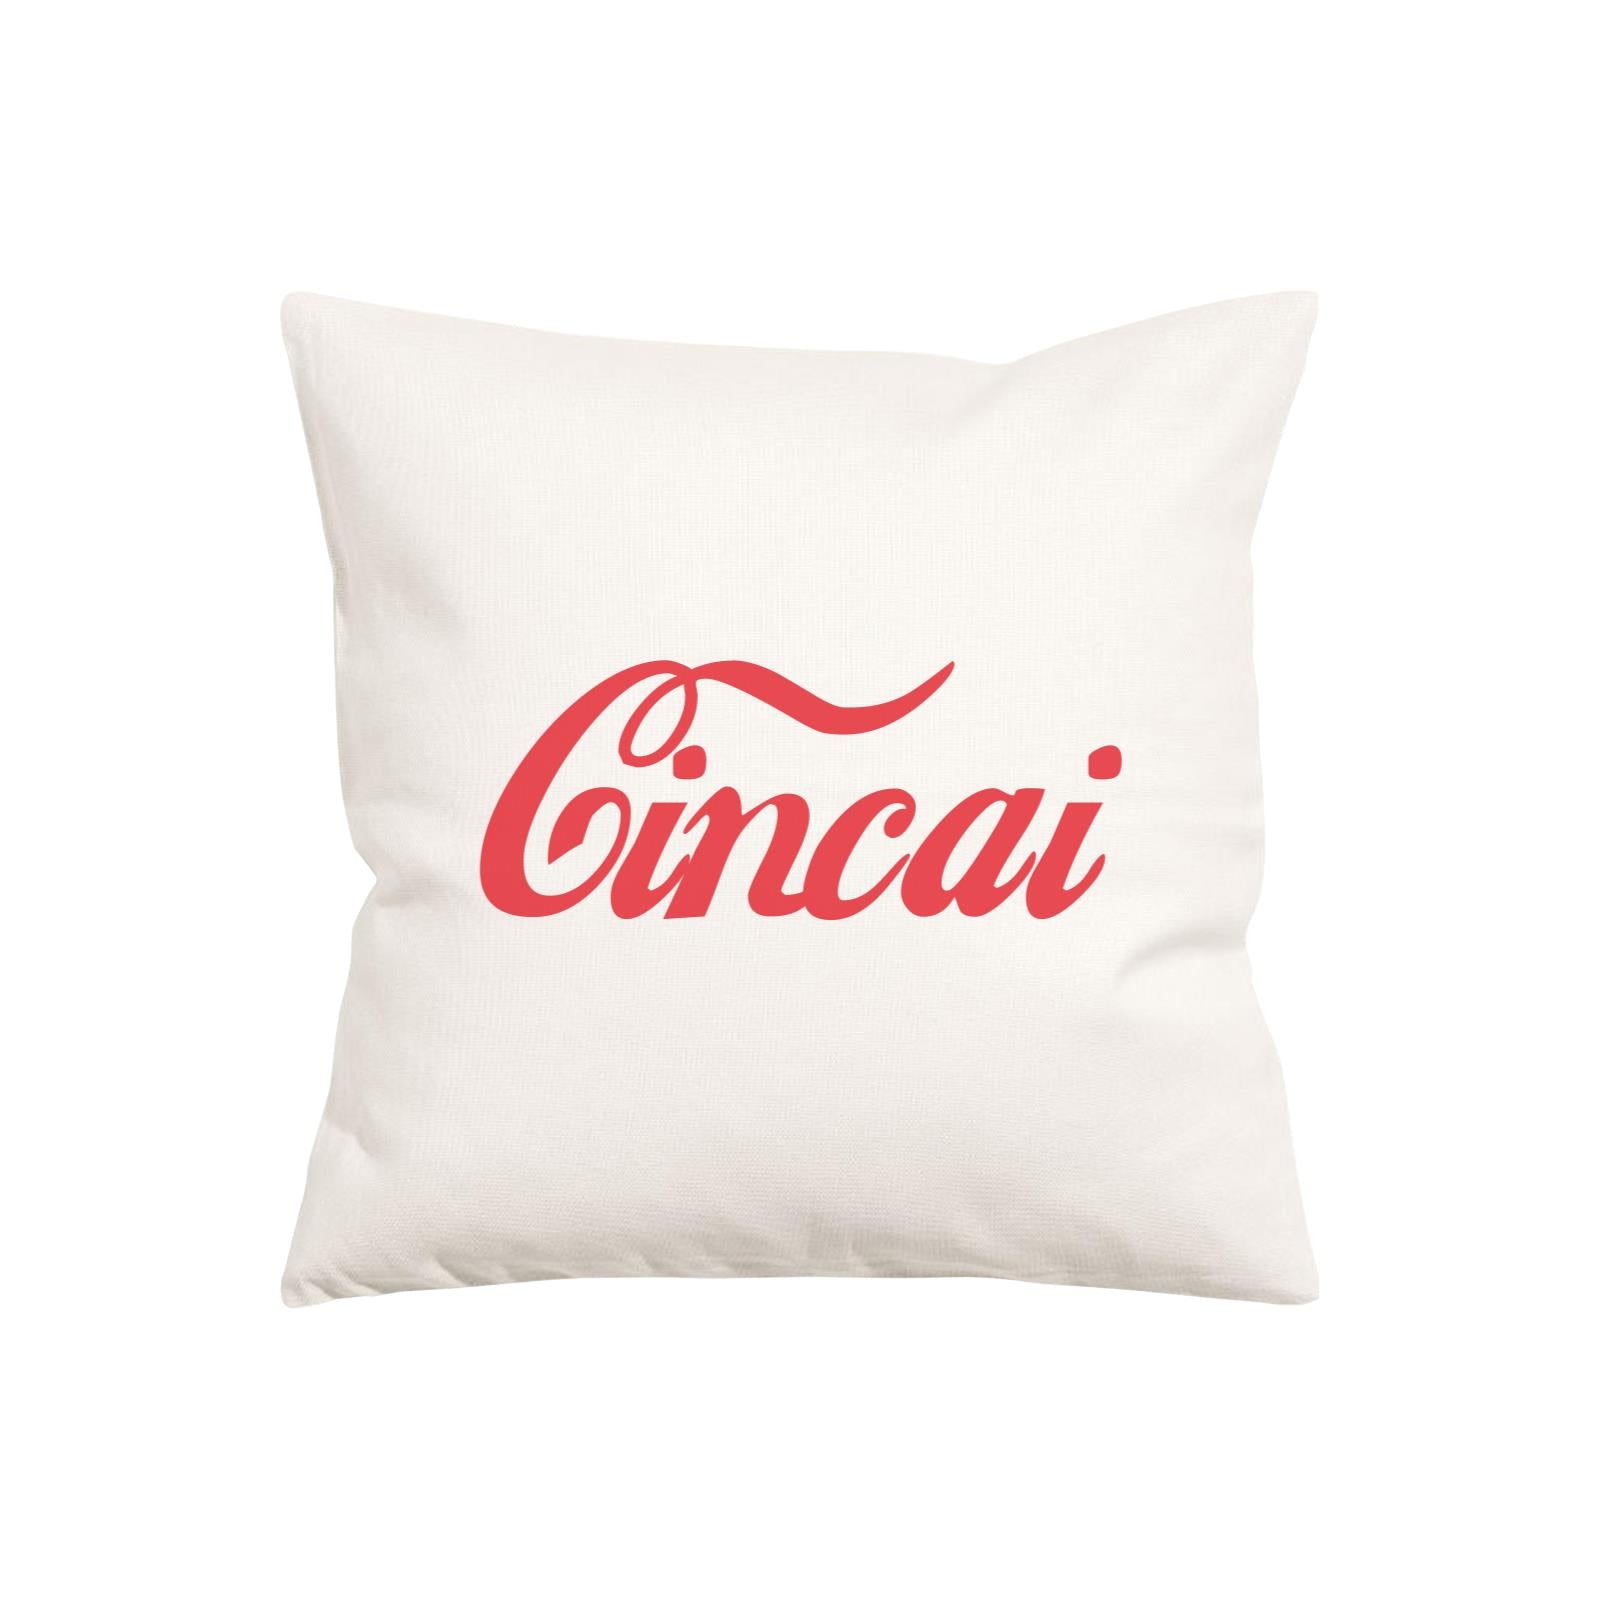 Slang Statement Cincai Cola Pillow Cushion